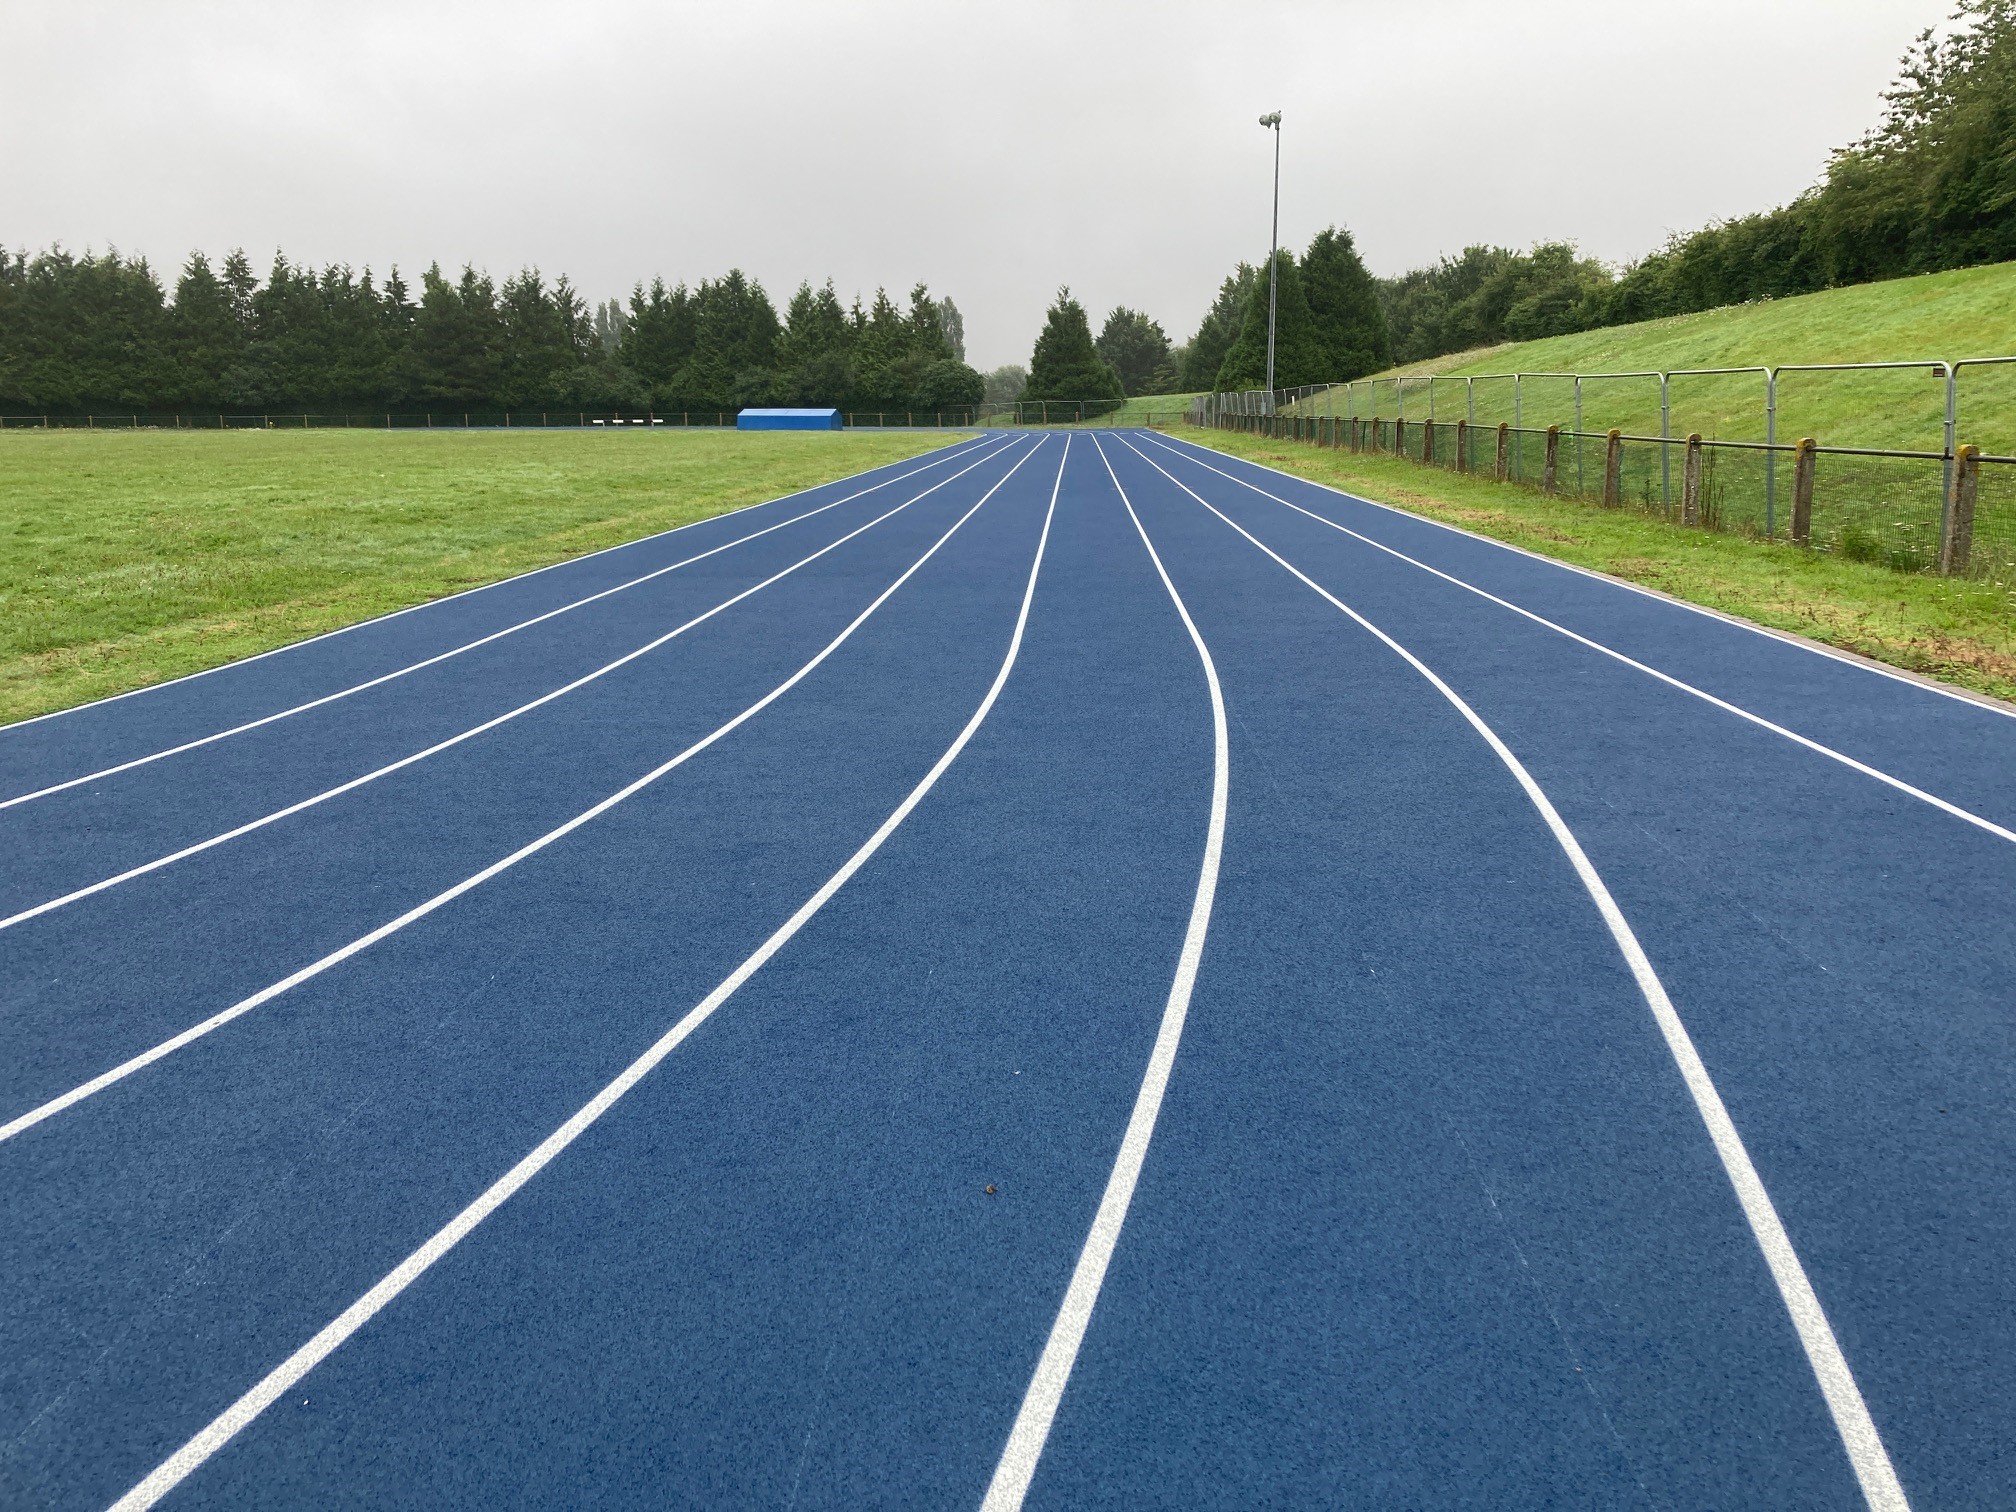 Athletics track resurface